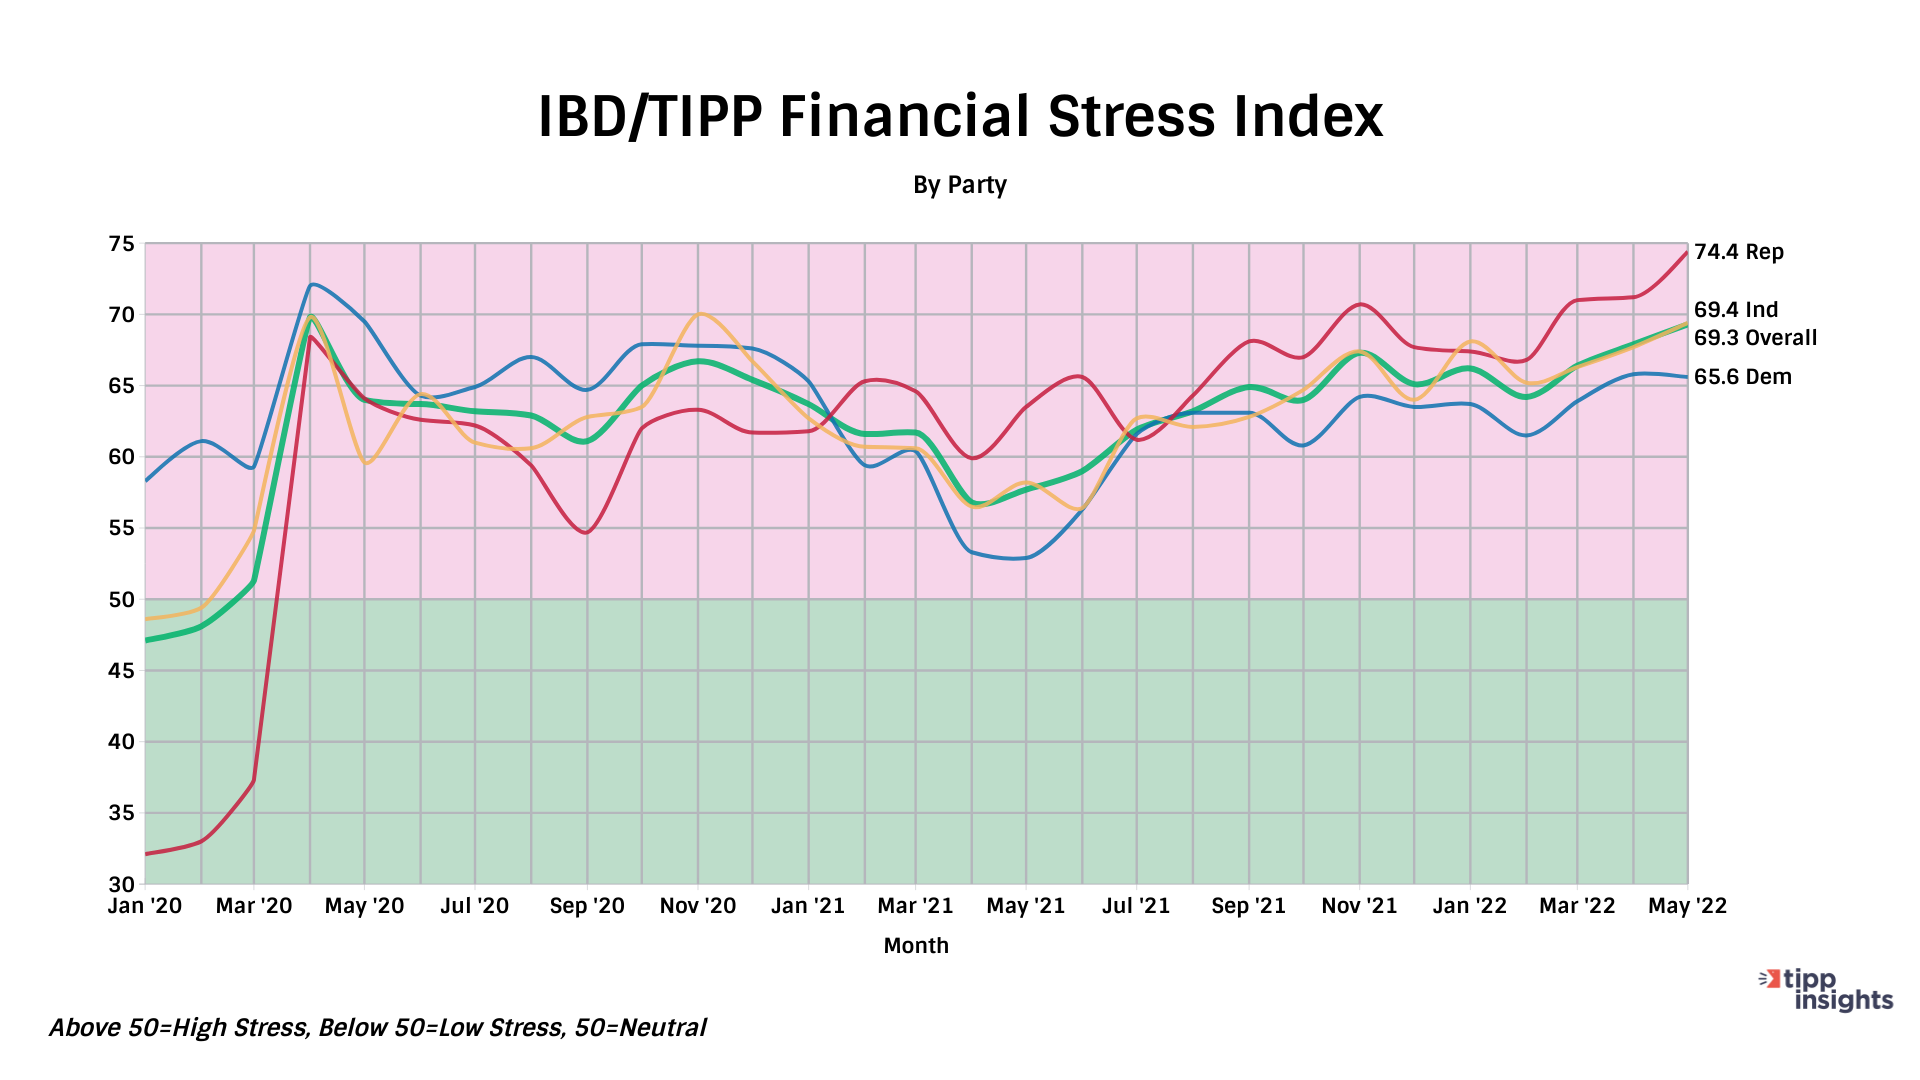 IBD/TIPP Financial Stress Index January 2020 - May 2022